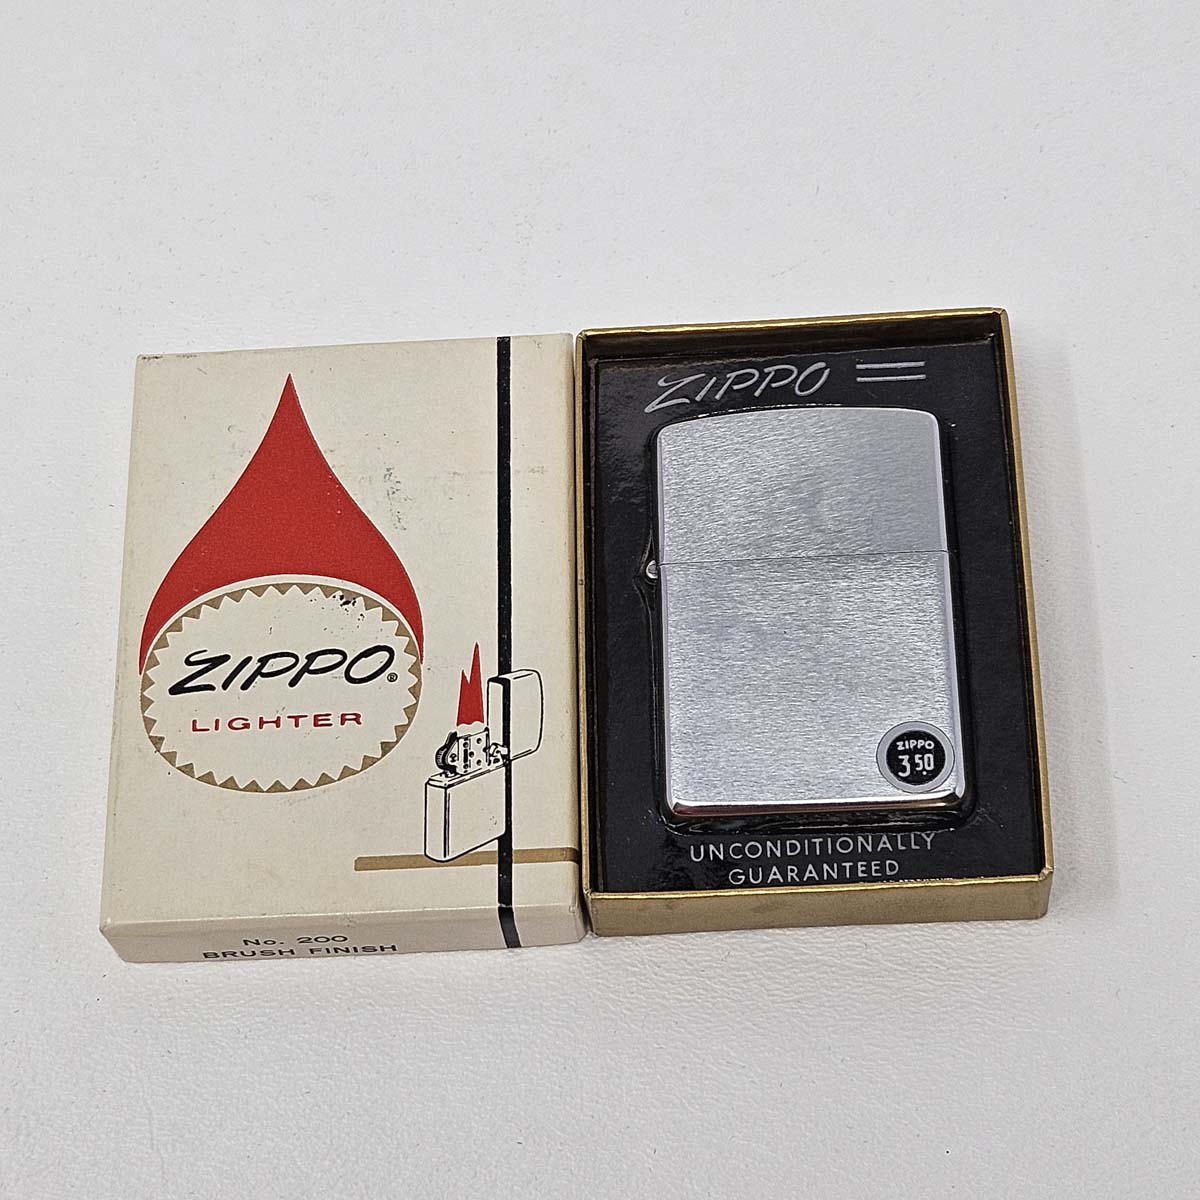 Vintage No. 200 Brushed Finish Zippo Lighter with Original Box 